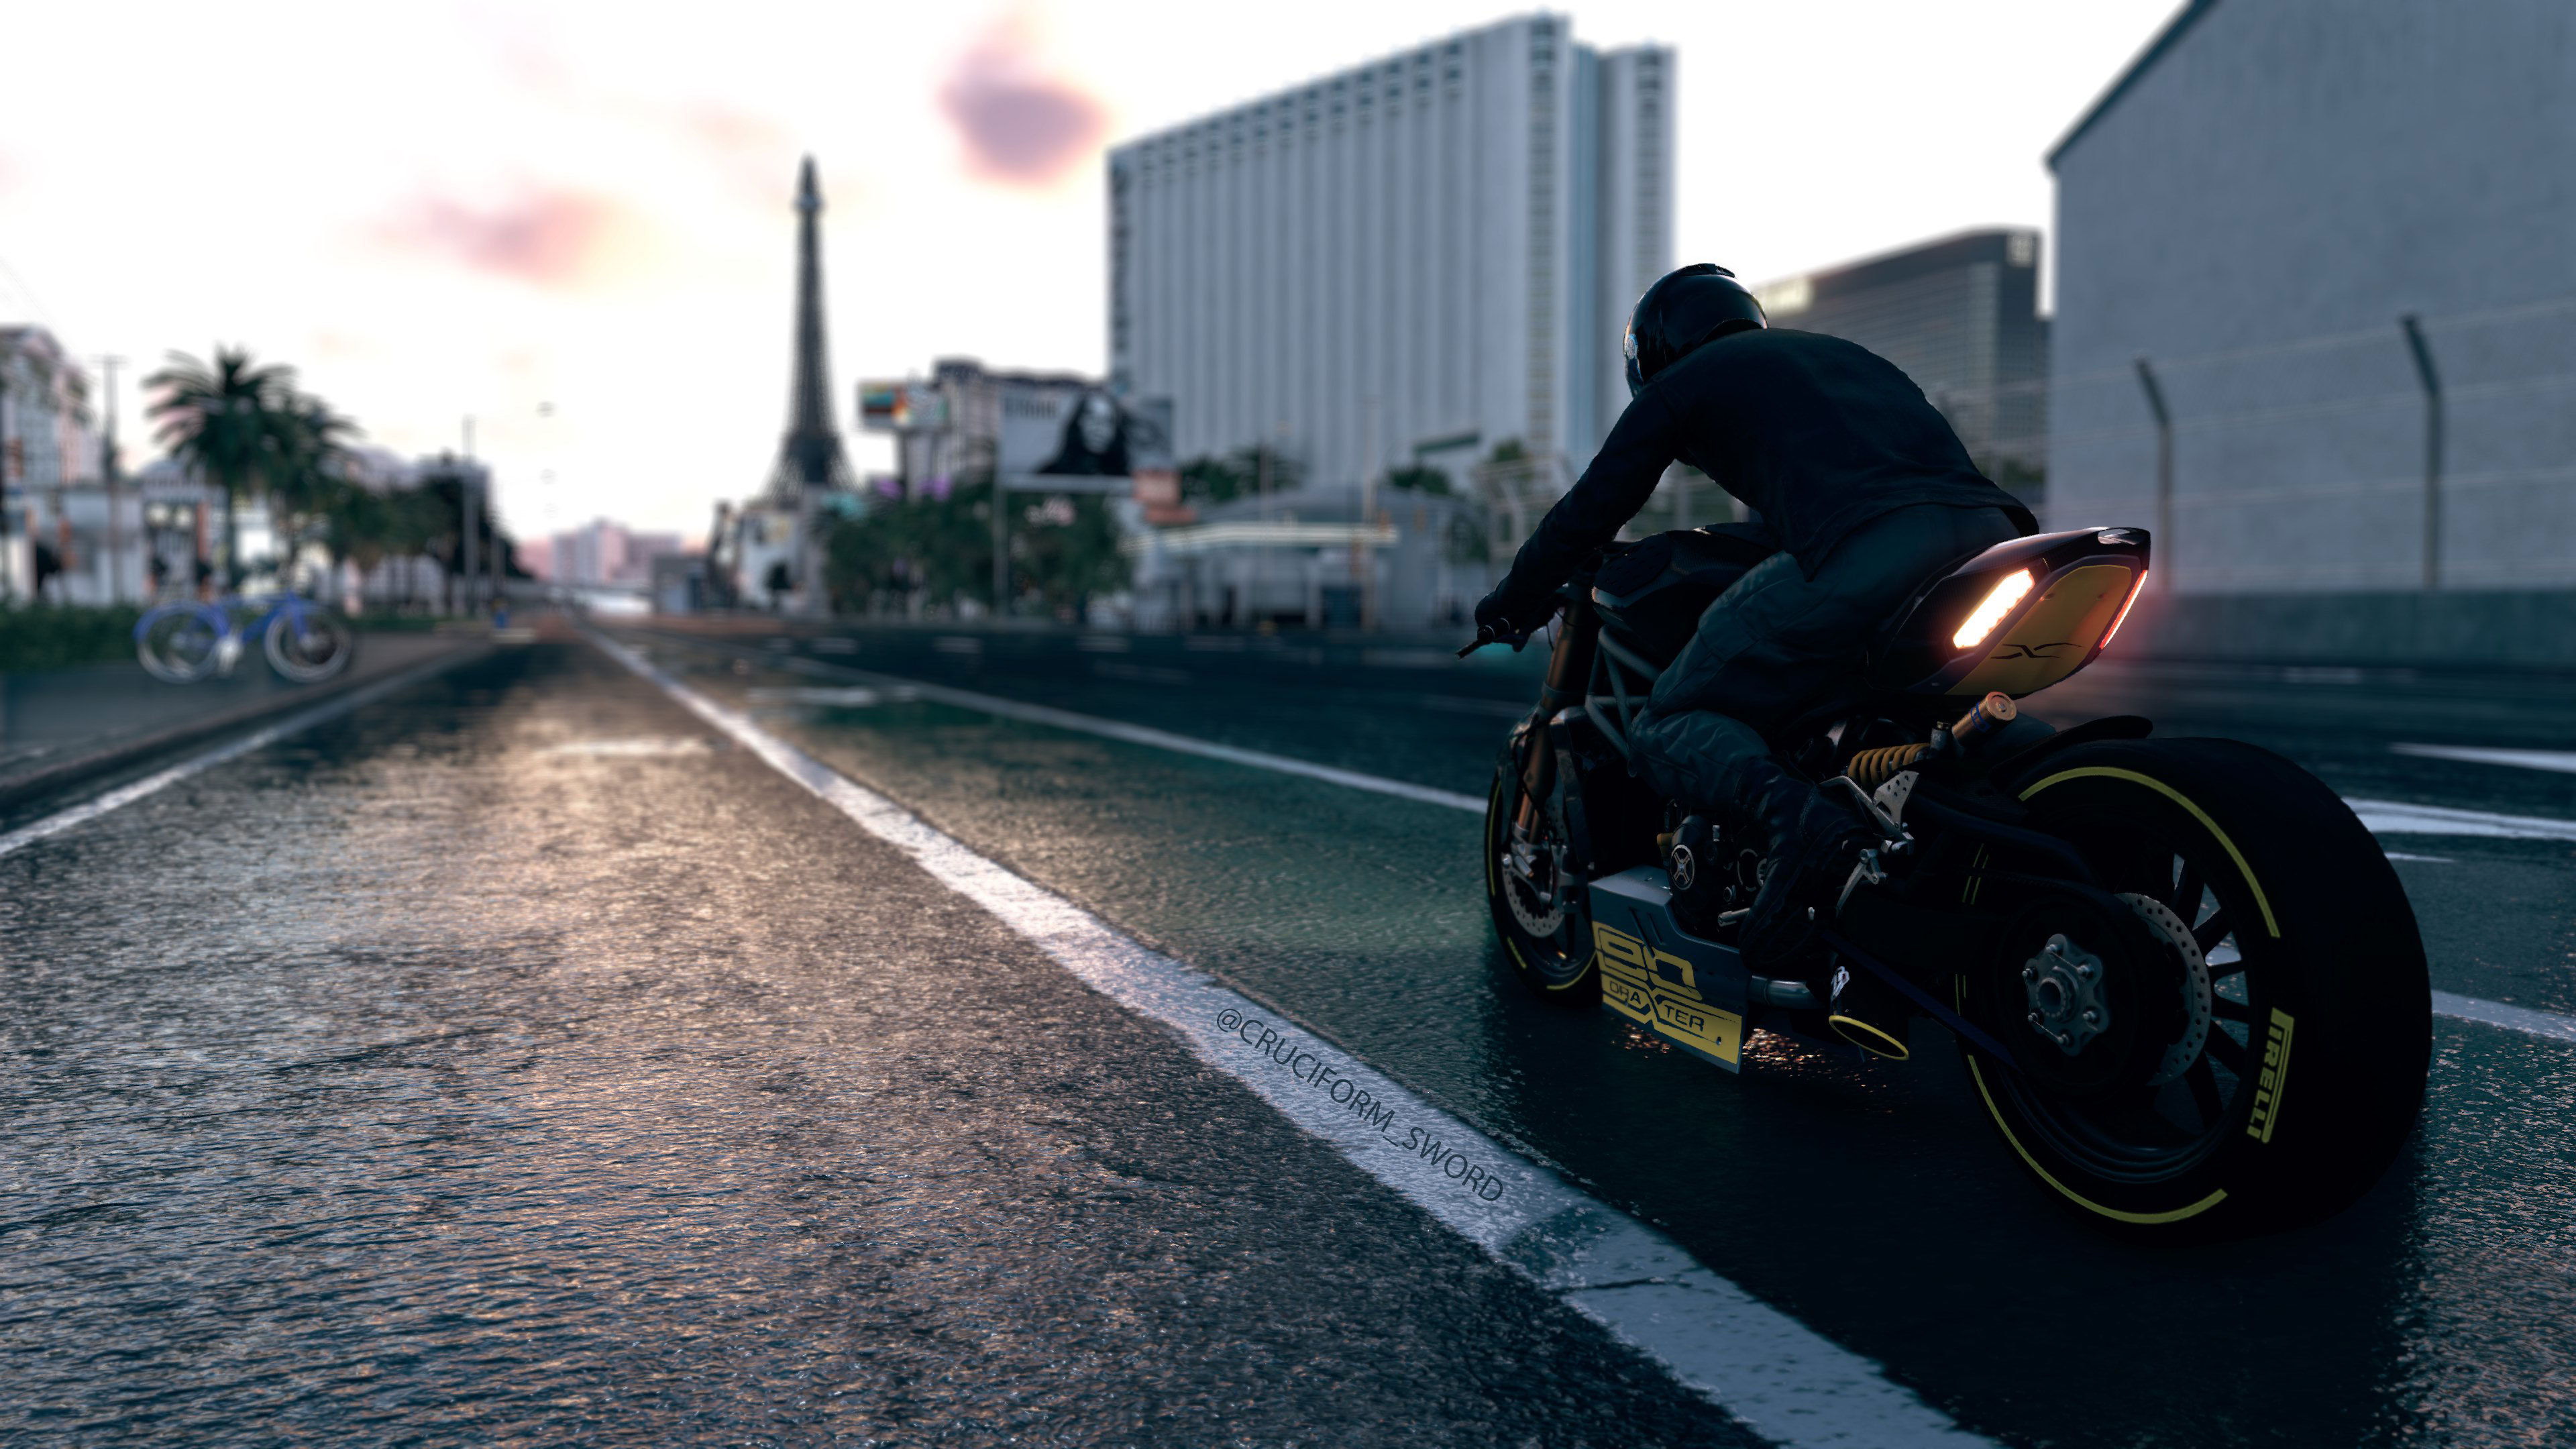 General 3840x2160 Ducati superbike The Crew 2 video games game poster screen shot 4K motorcycle